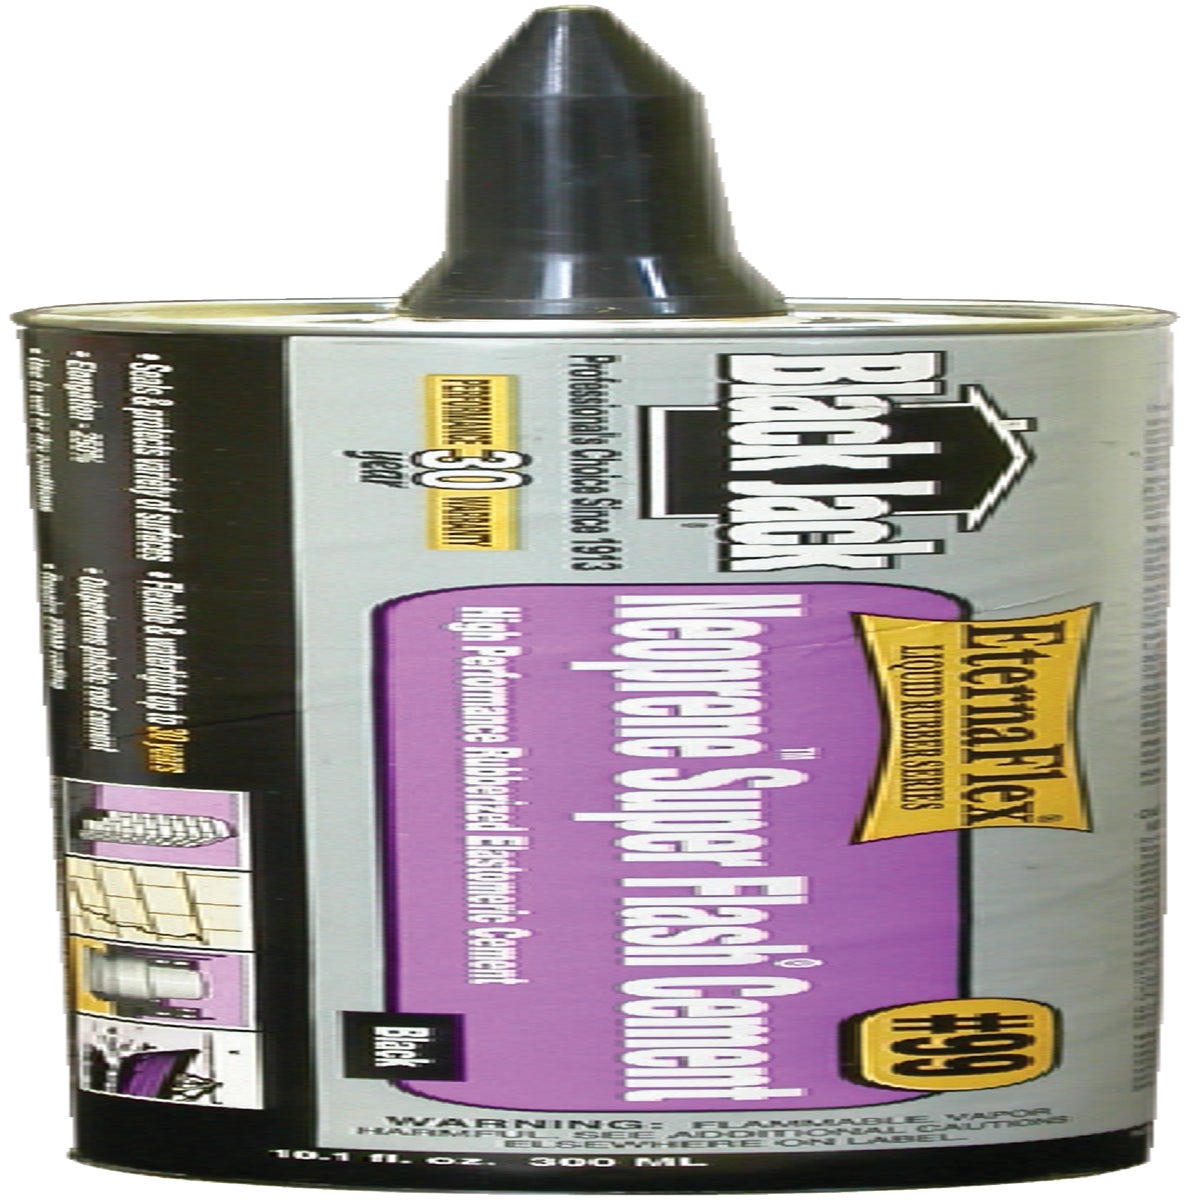 1010-9-66 Black Jack Neoprene Super Flash Cement flashing sealant